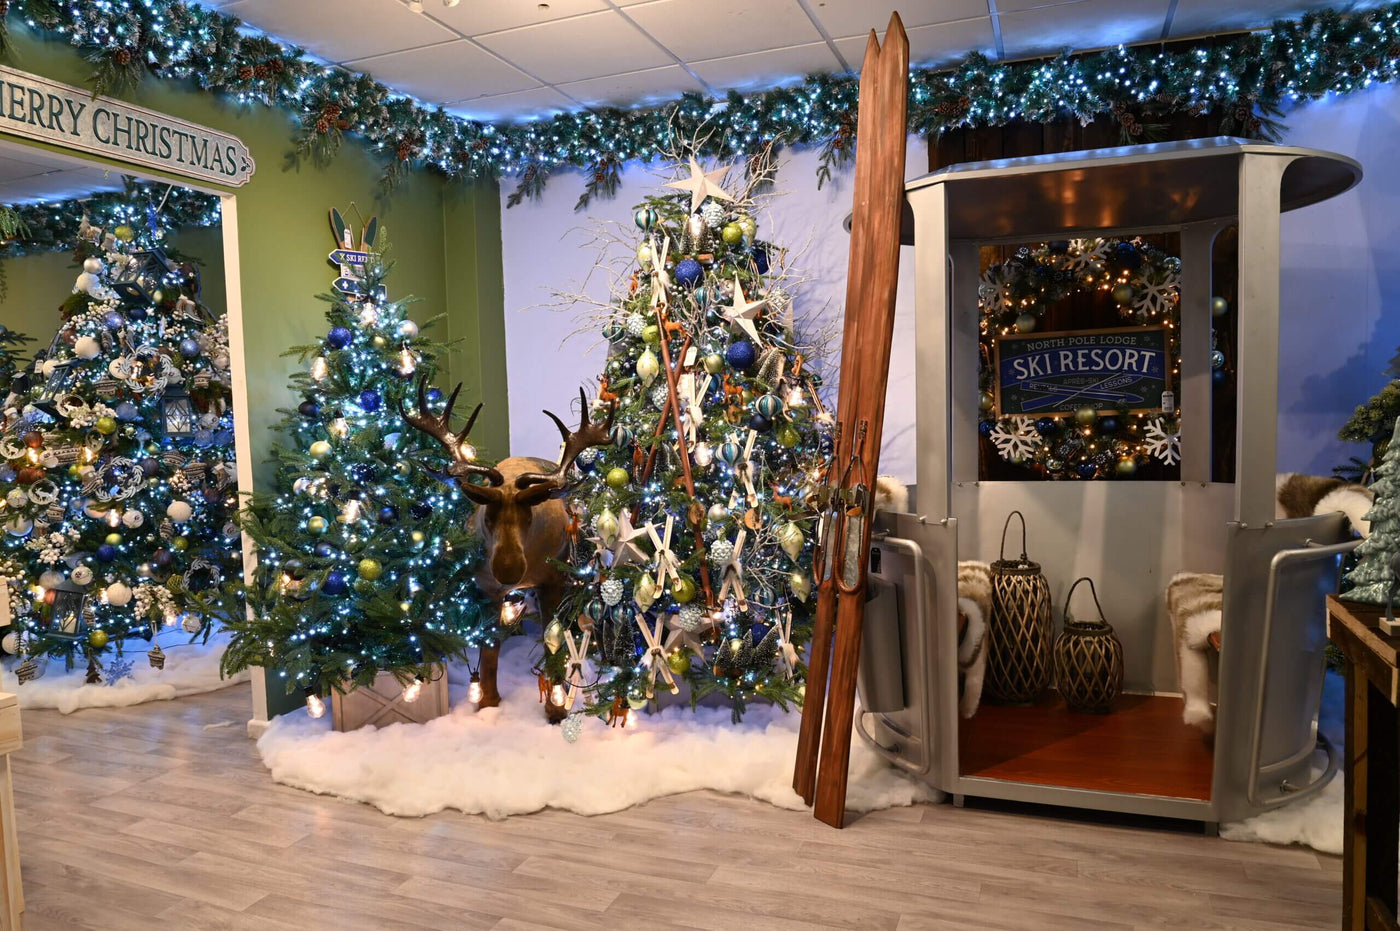 Alpine Ski Lodge Christmas Theme with Reindeer, Christmas Tree and Skis, blue and green colour scheme.